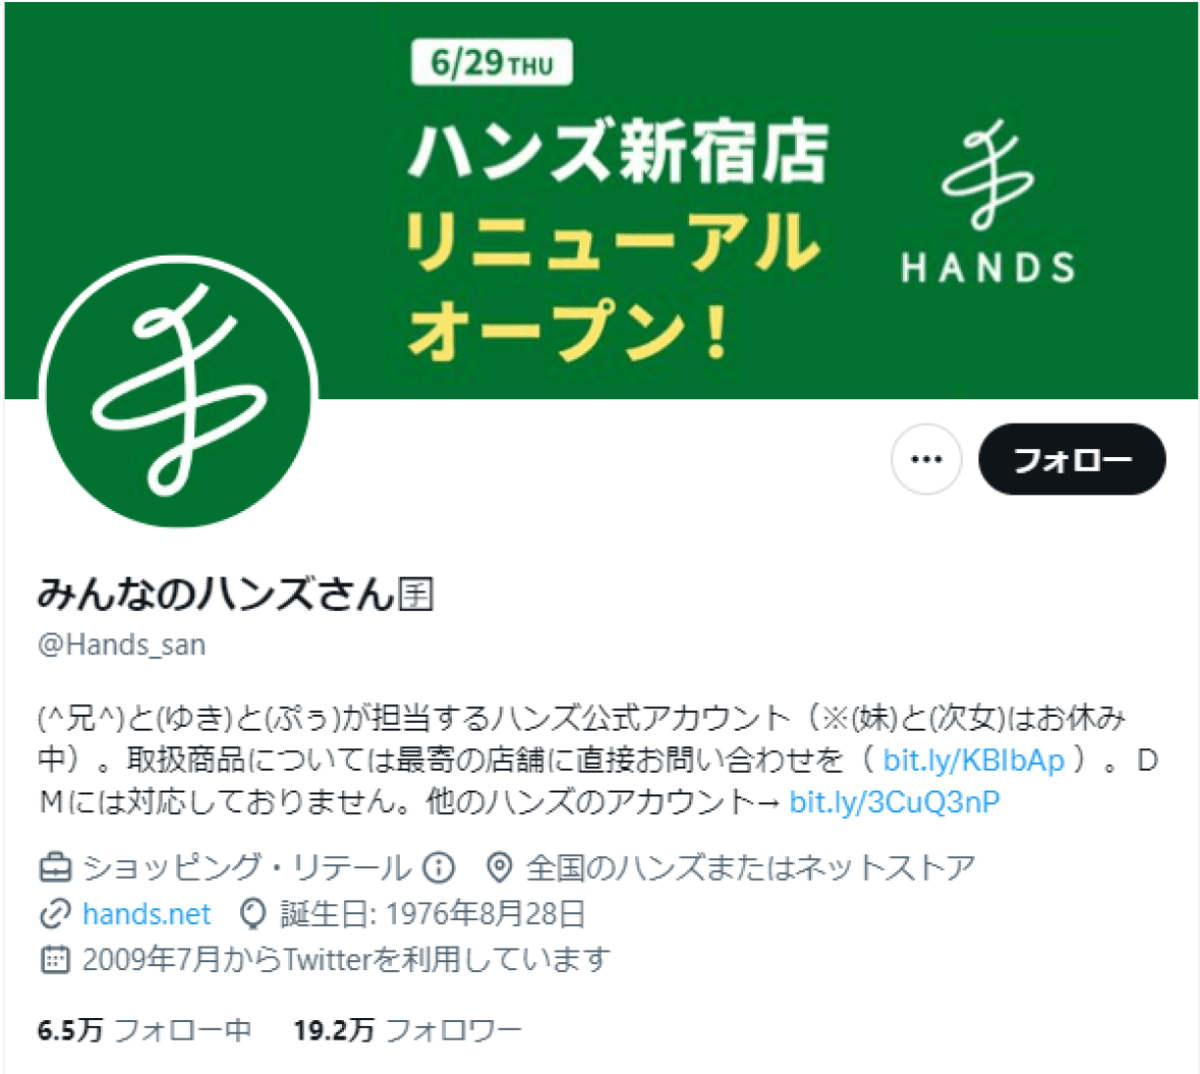 twitter-account-hands-san